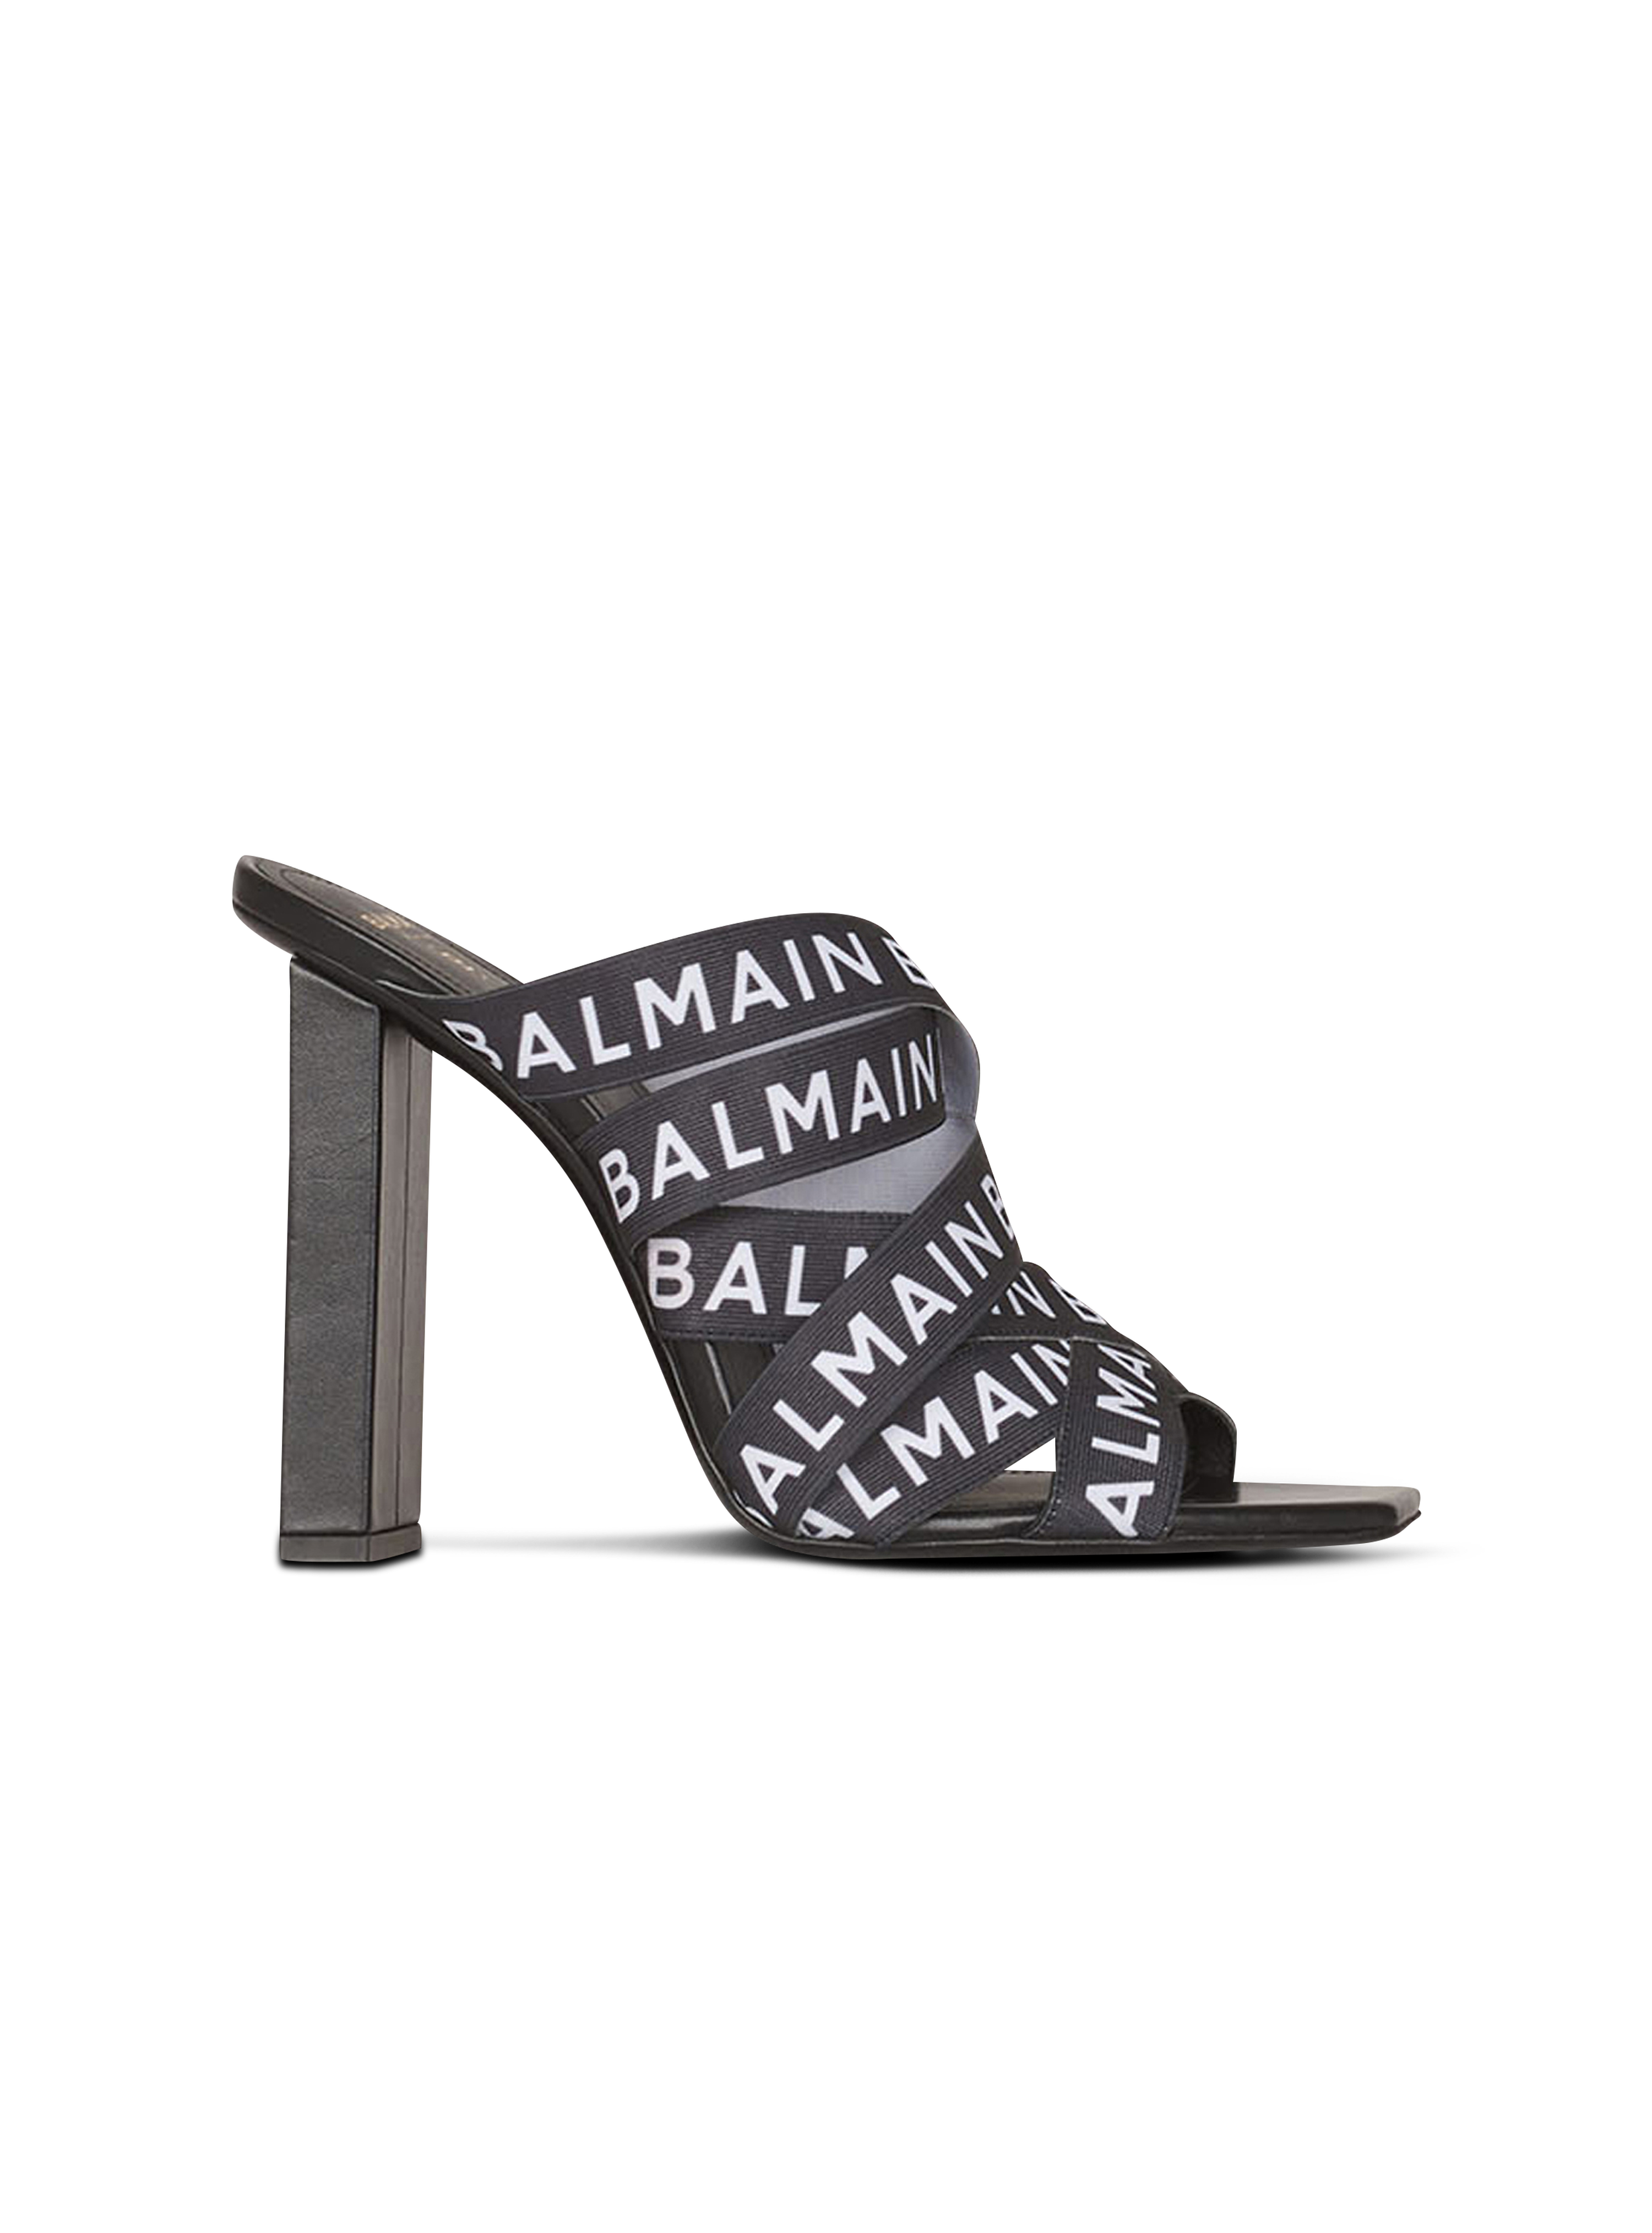 Sandalen Union mit Balmain-Logo, schwarz